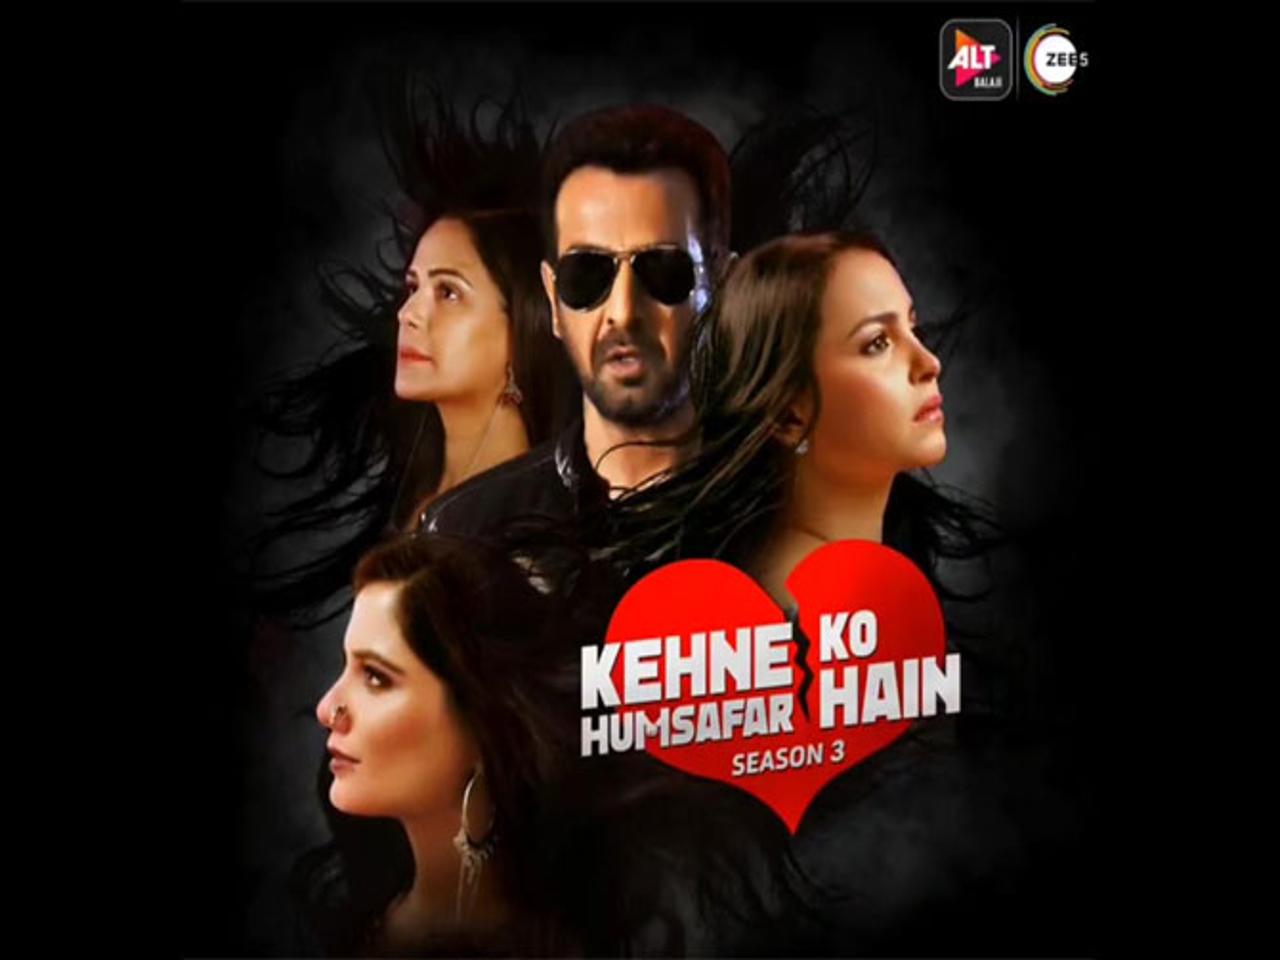 Kehne Ko Humsafar Hai Season 4 Release Date Confirmed? Check Details & Cast